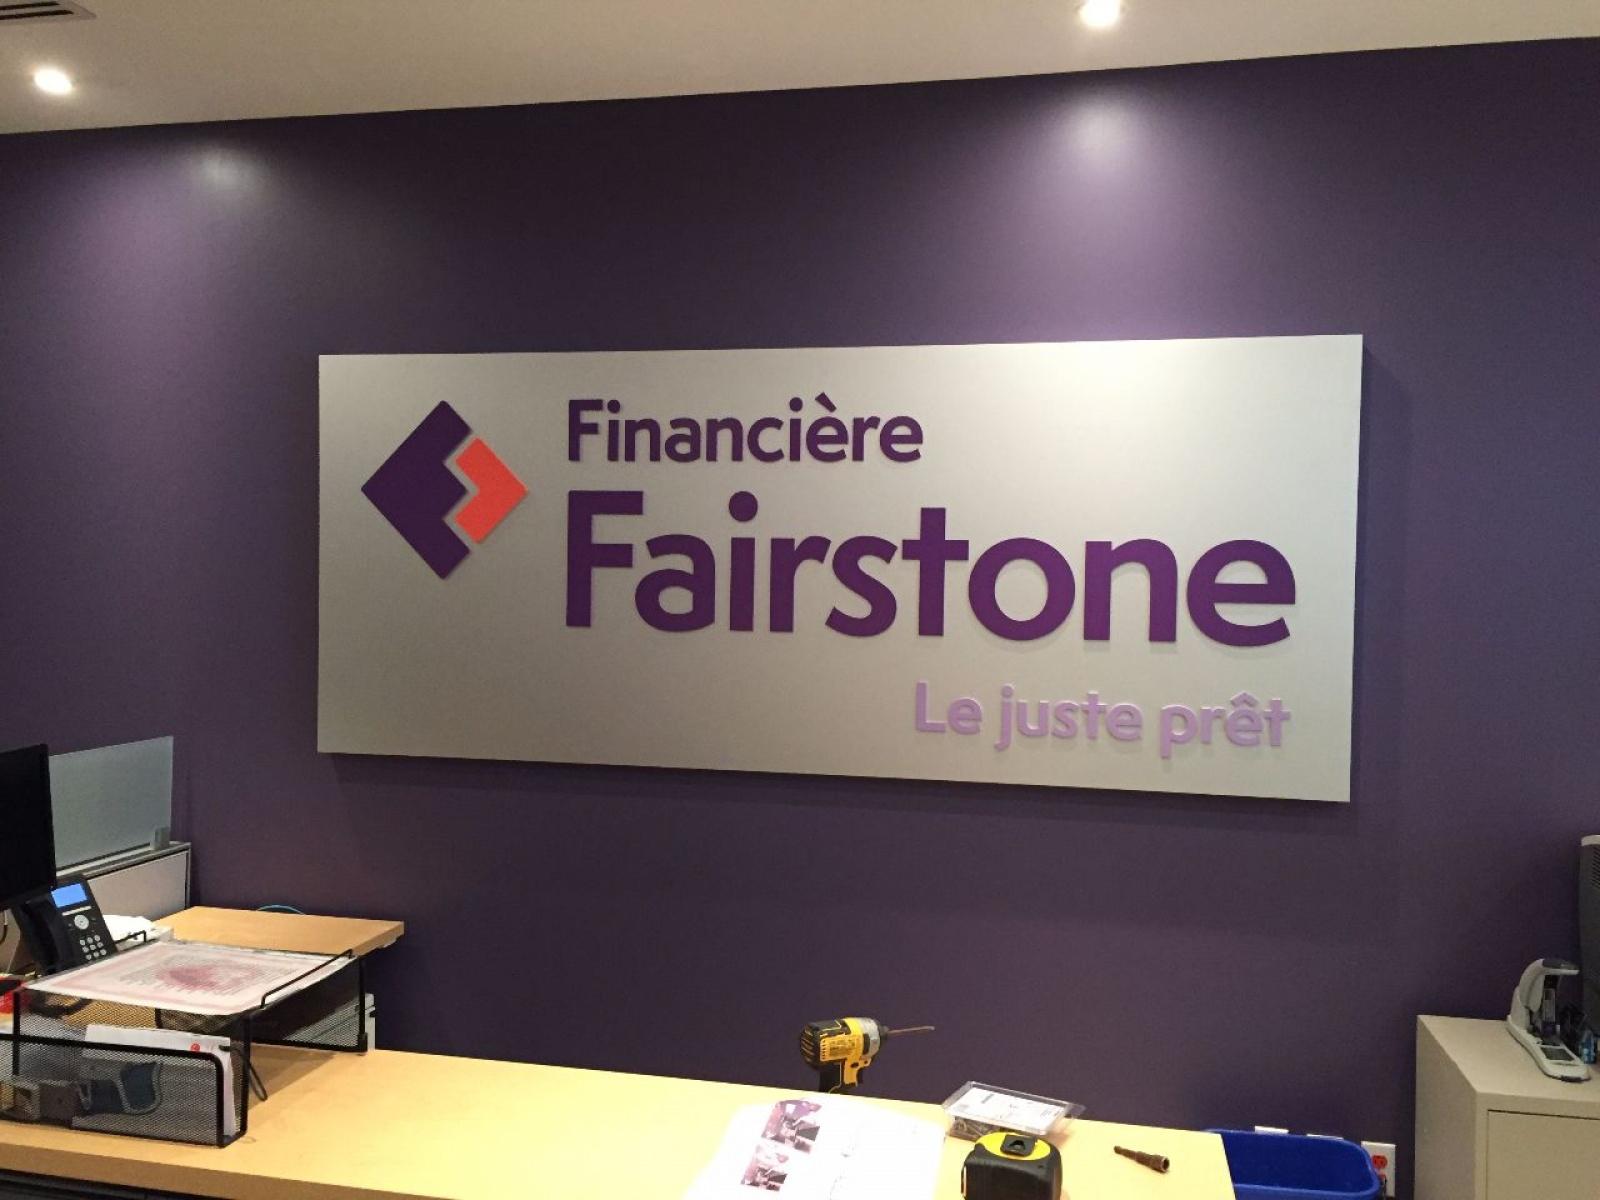 Fairstone Financial corporate signage